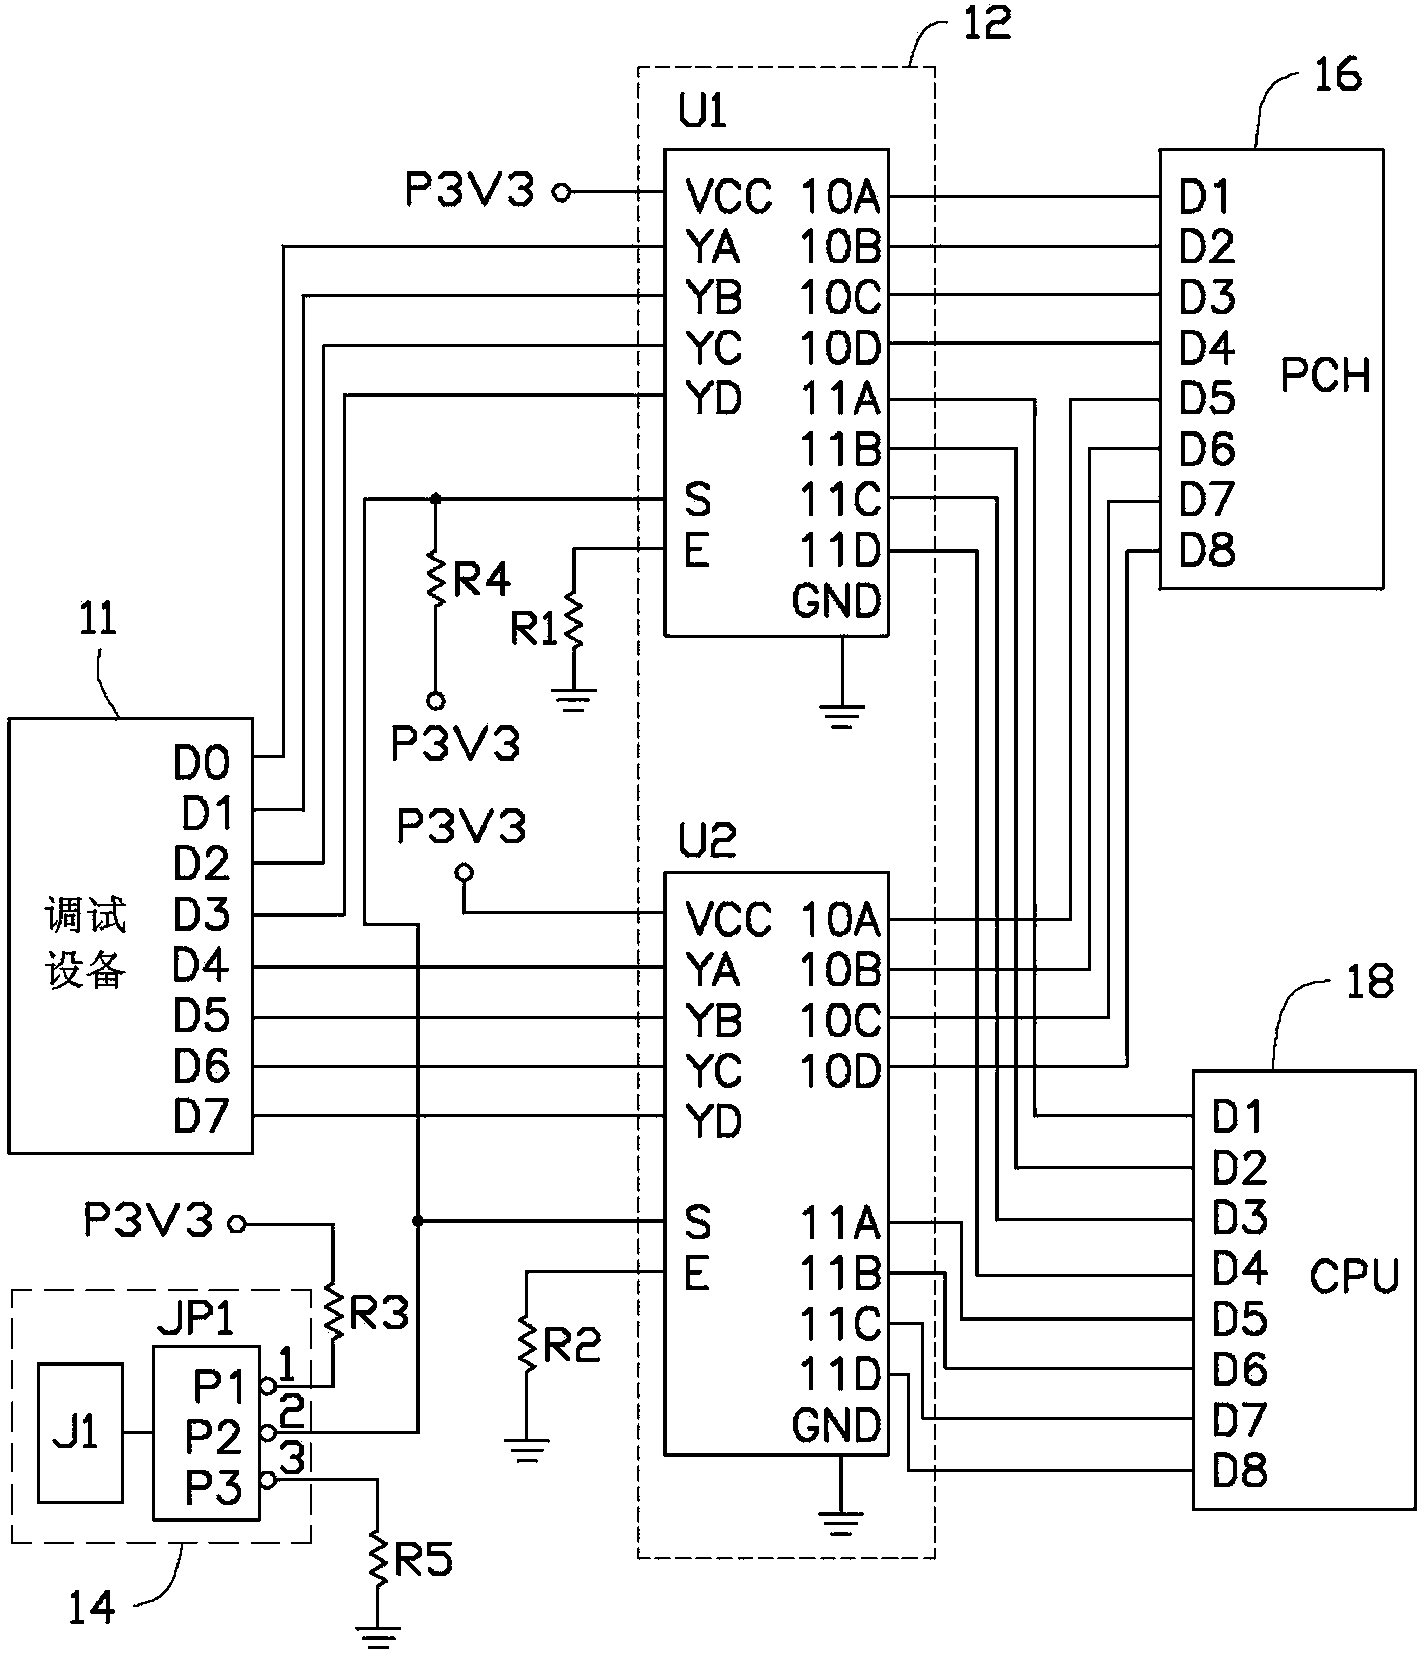 Mainboard debugging circuit